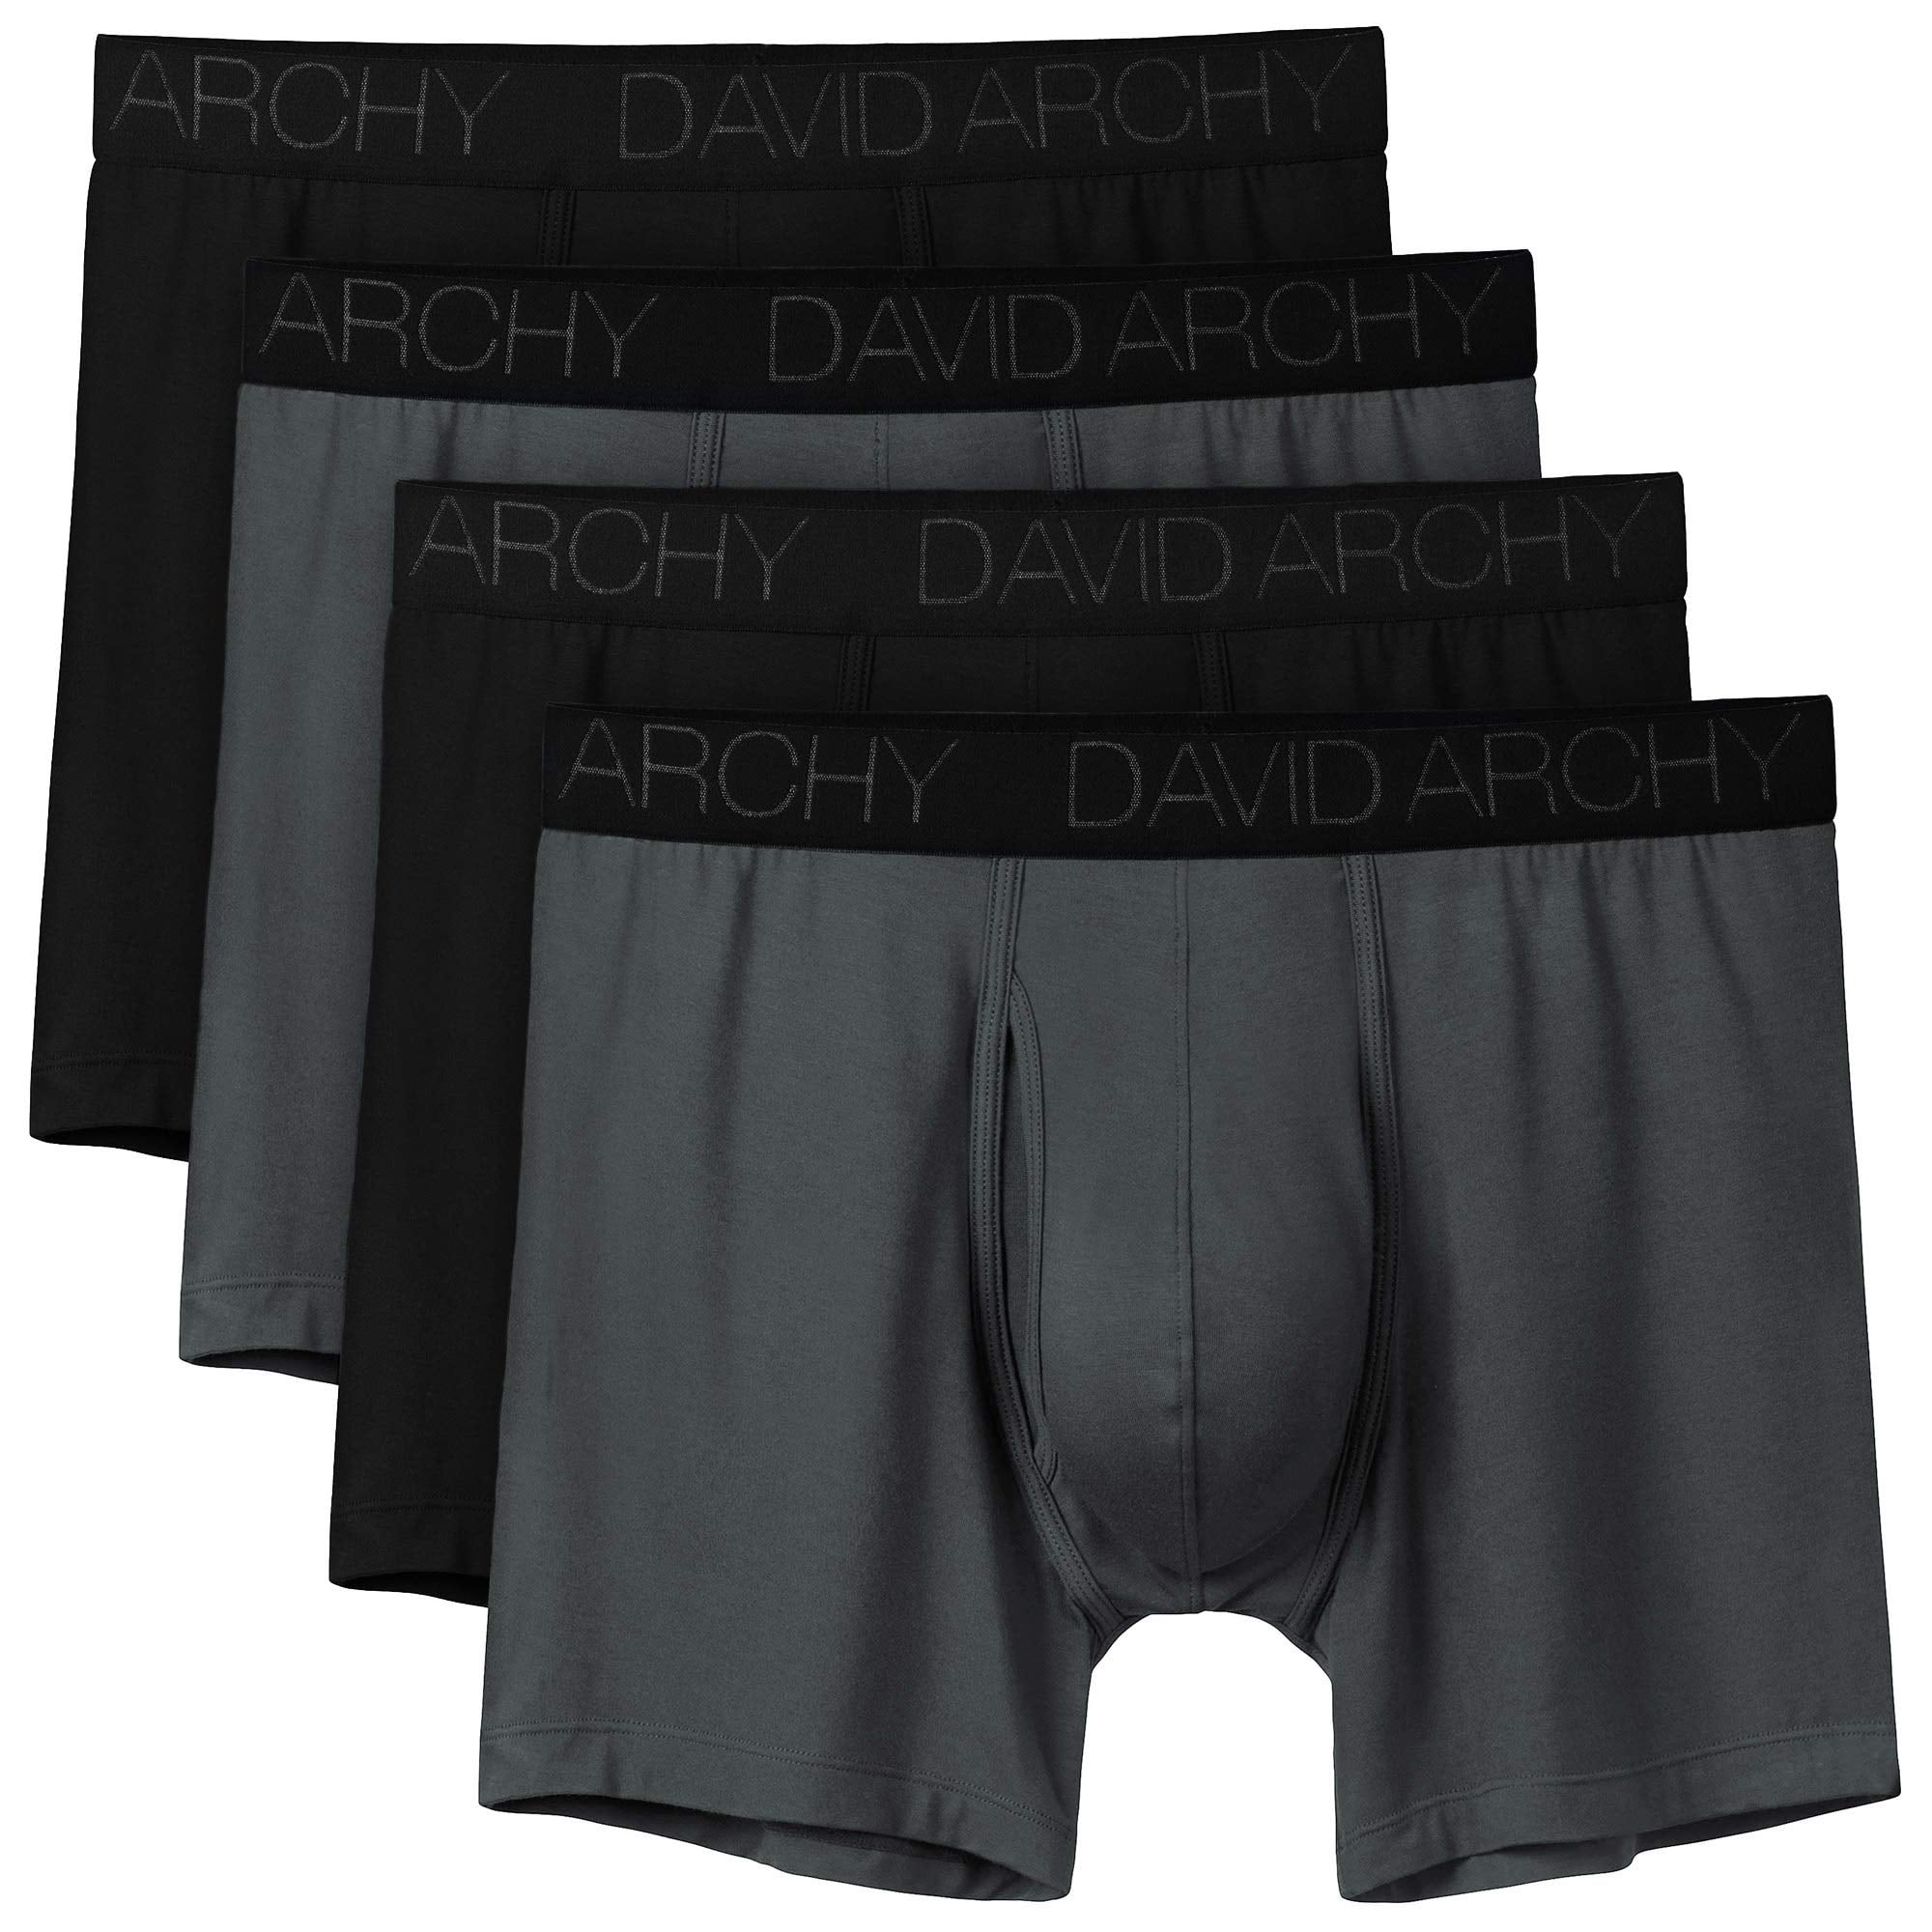 DAVID ARCHY Men's 4 Pack Bamboo Rayon Soft Lightweight Pouch Briefs